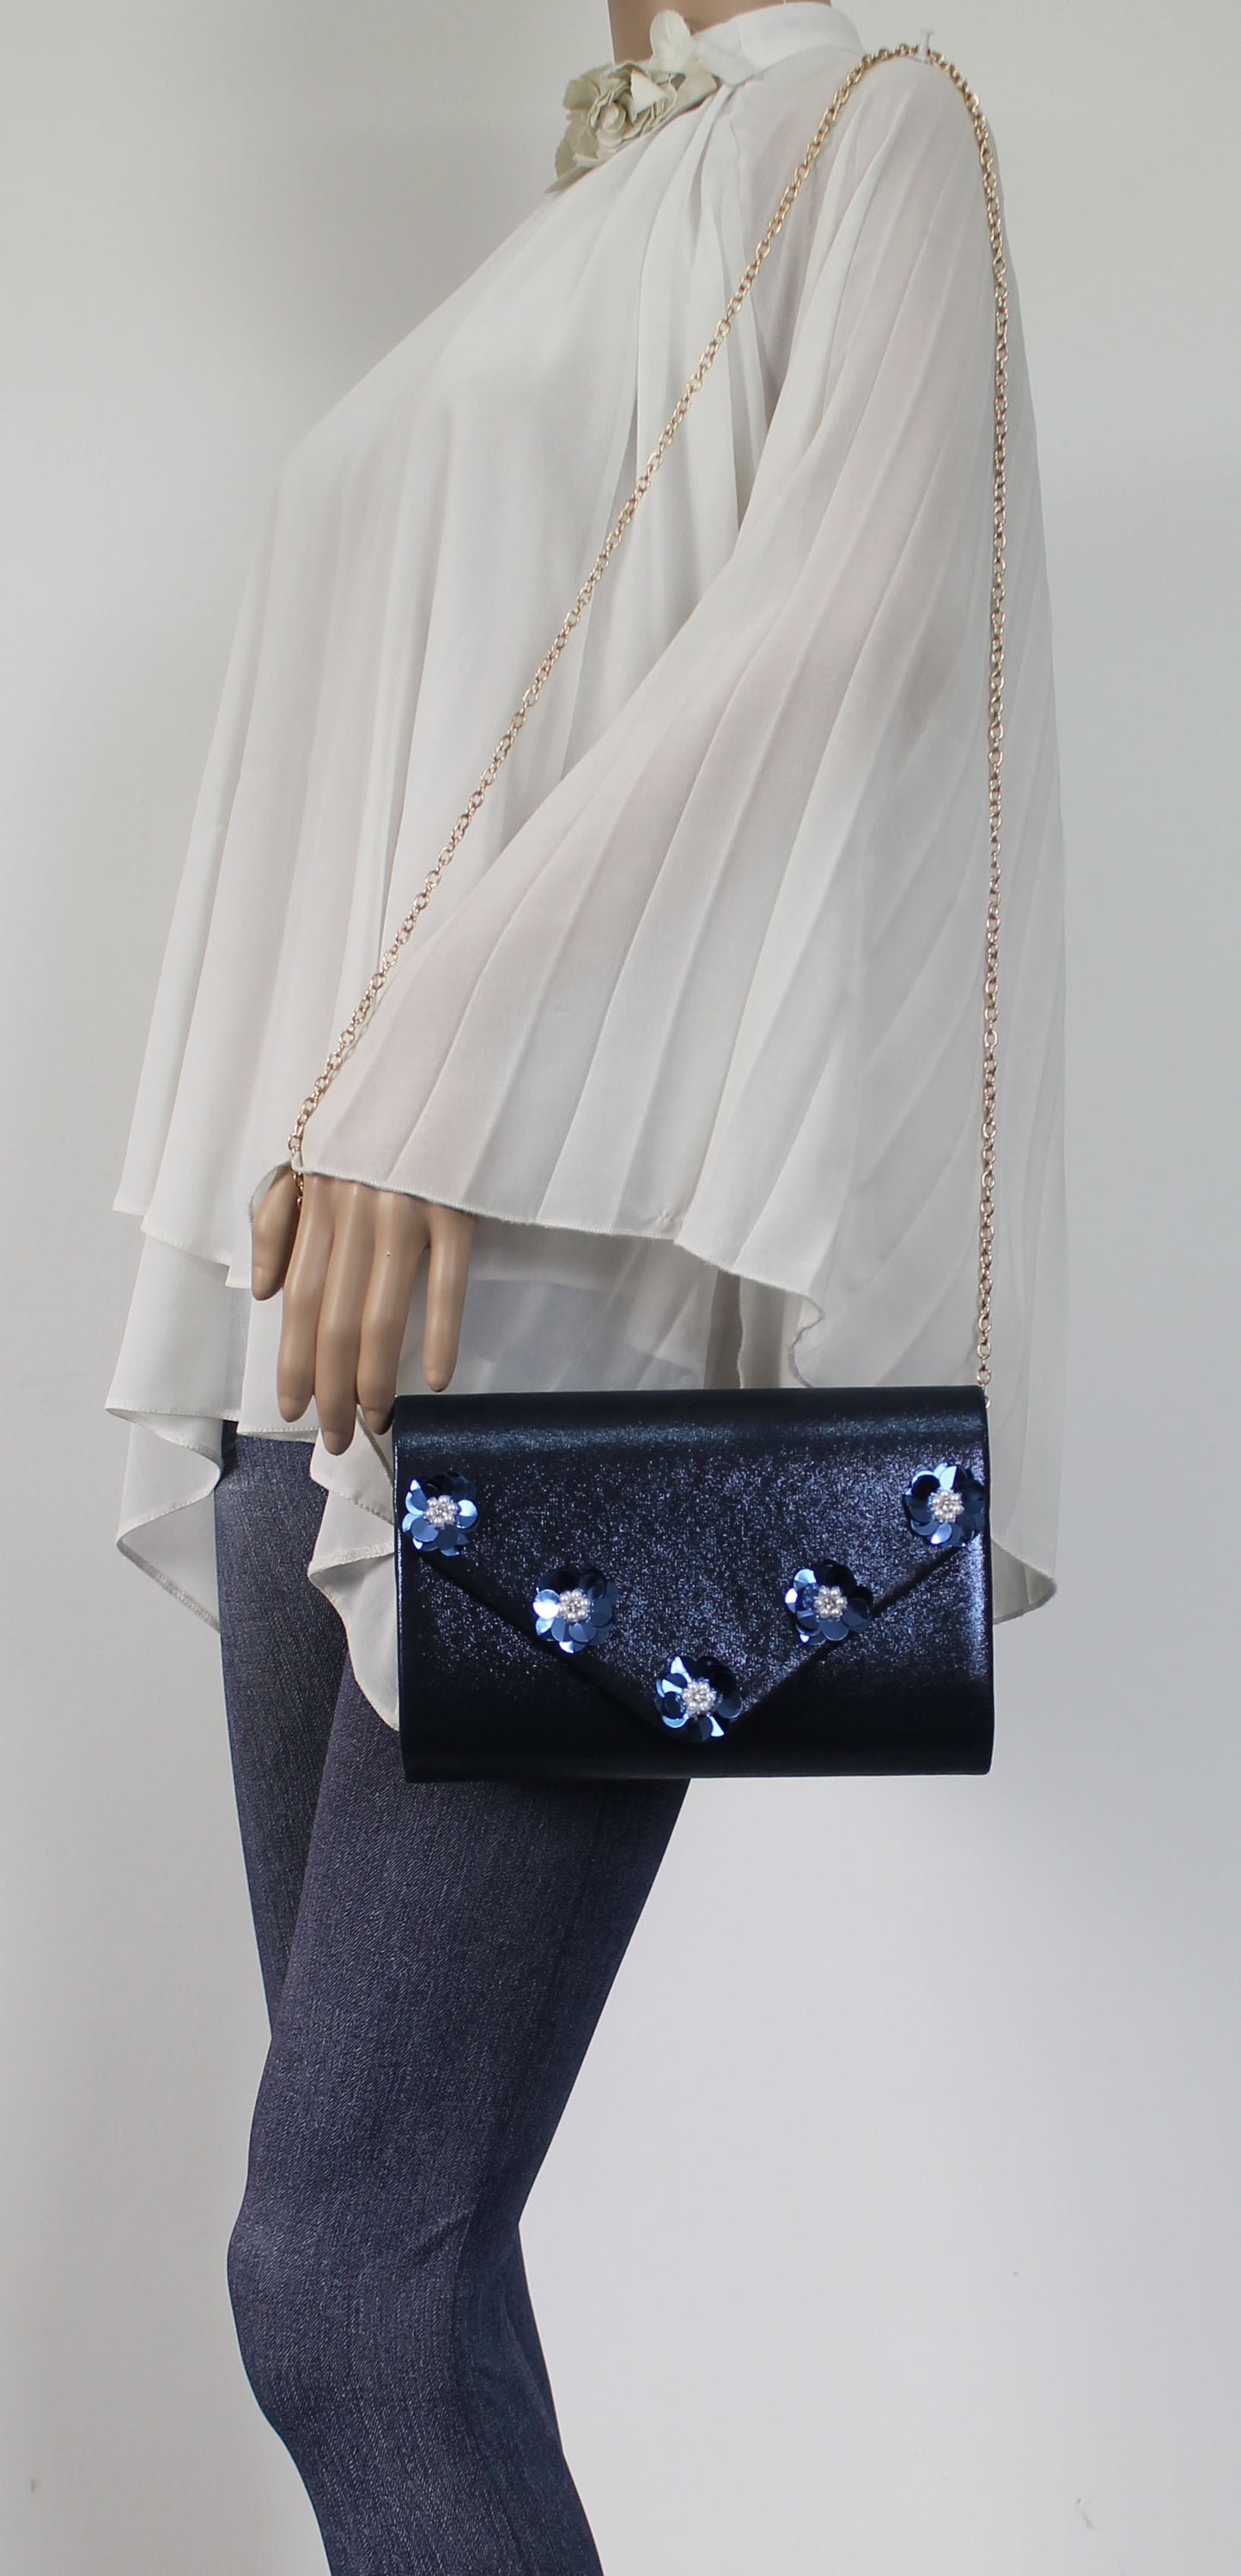 SWANKYSWANS Josie Clutch Bag Blue Cute Cheap Clutch Bag For Weddings School and Work